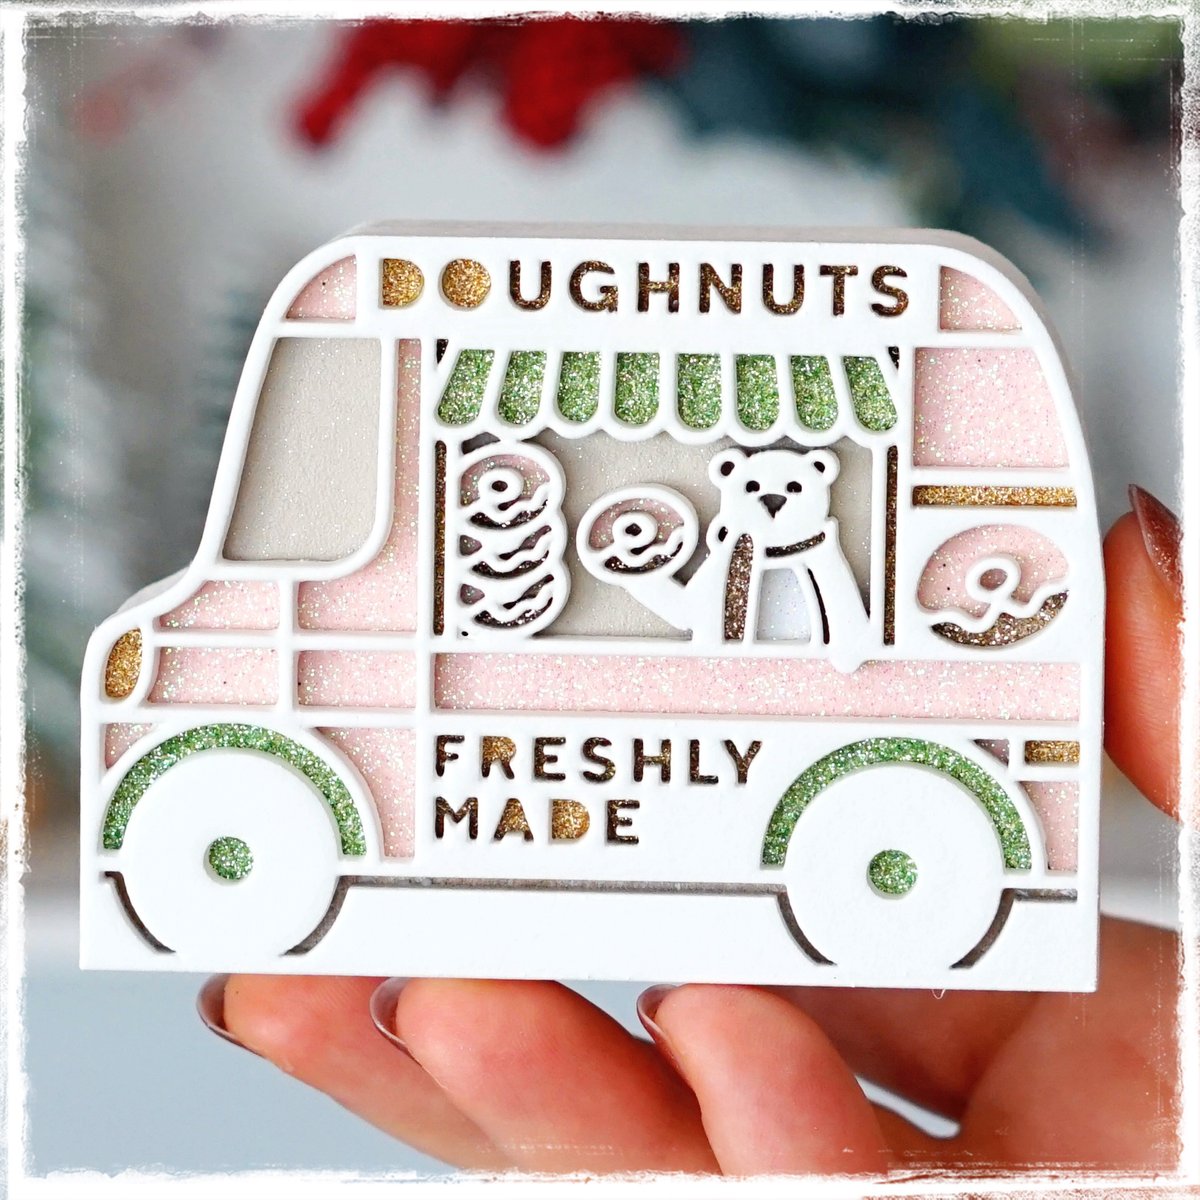 Image of Doughnut Truck